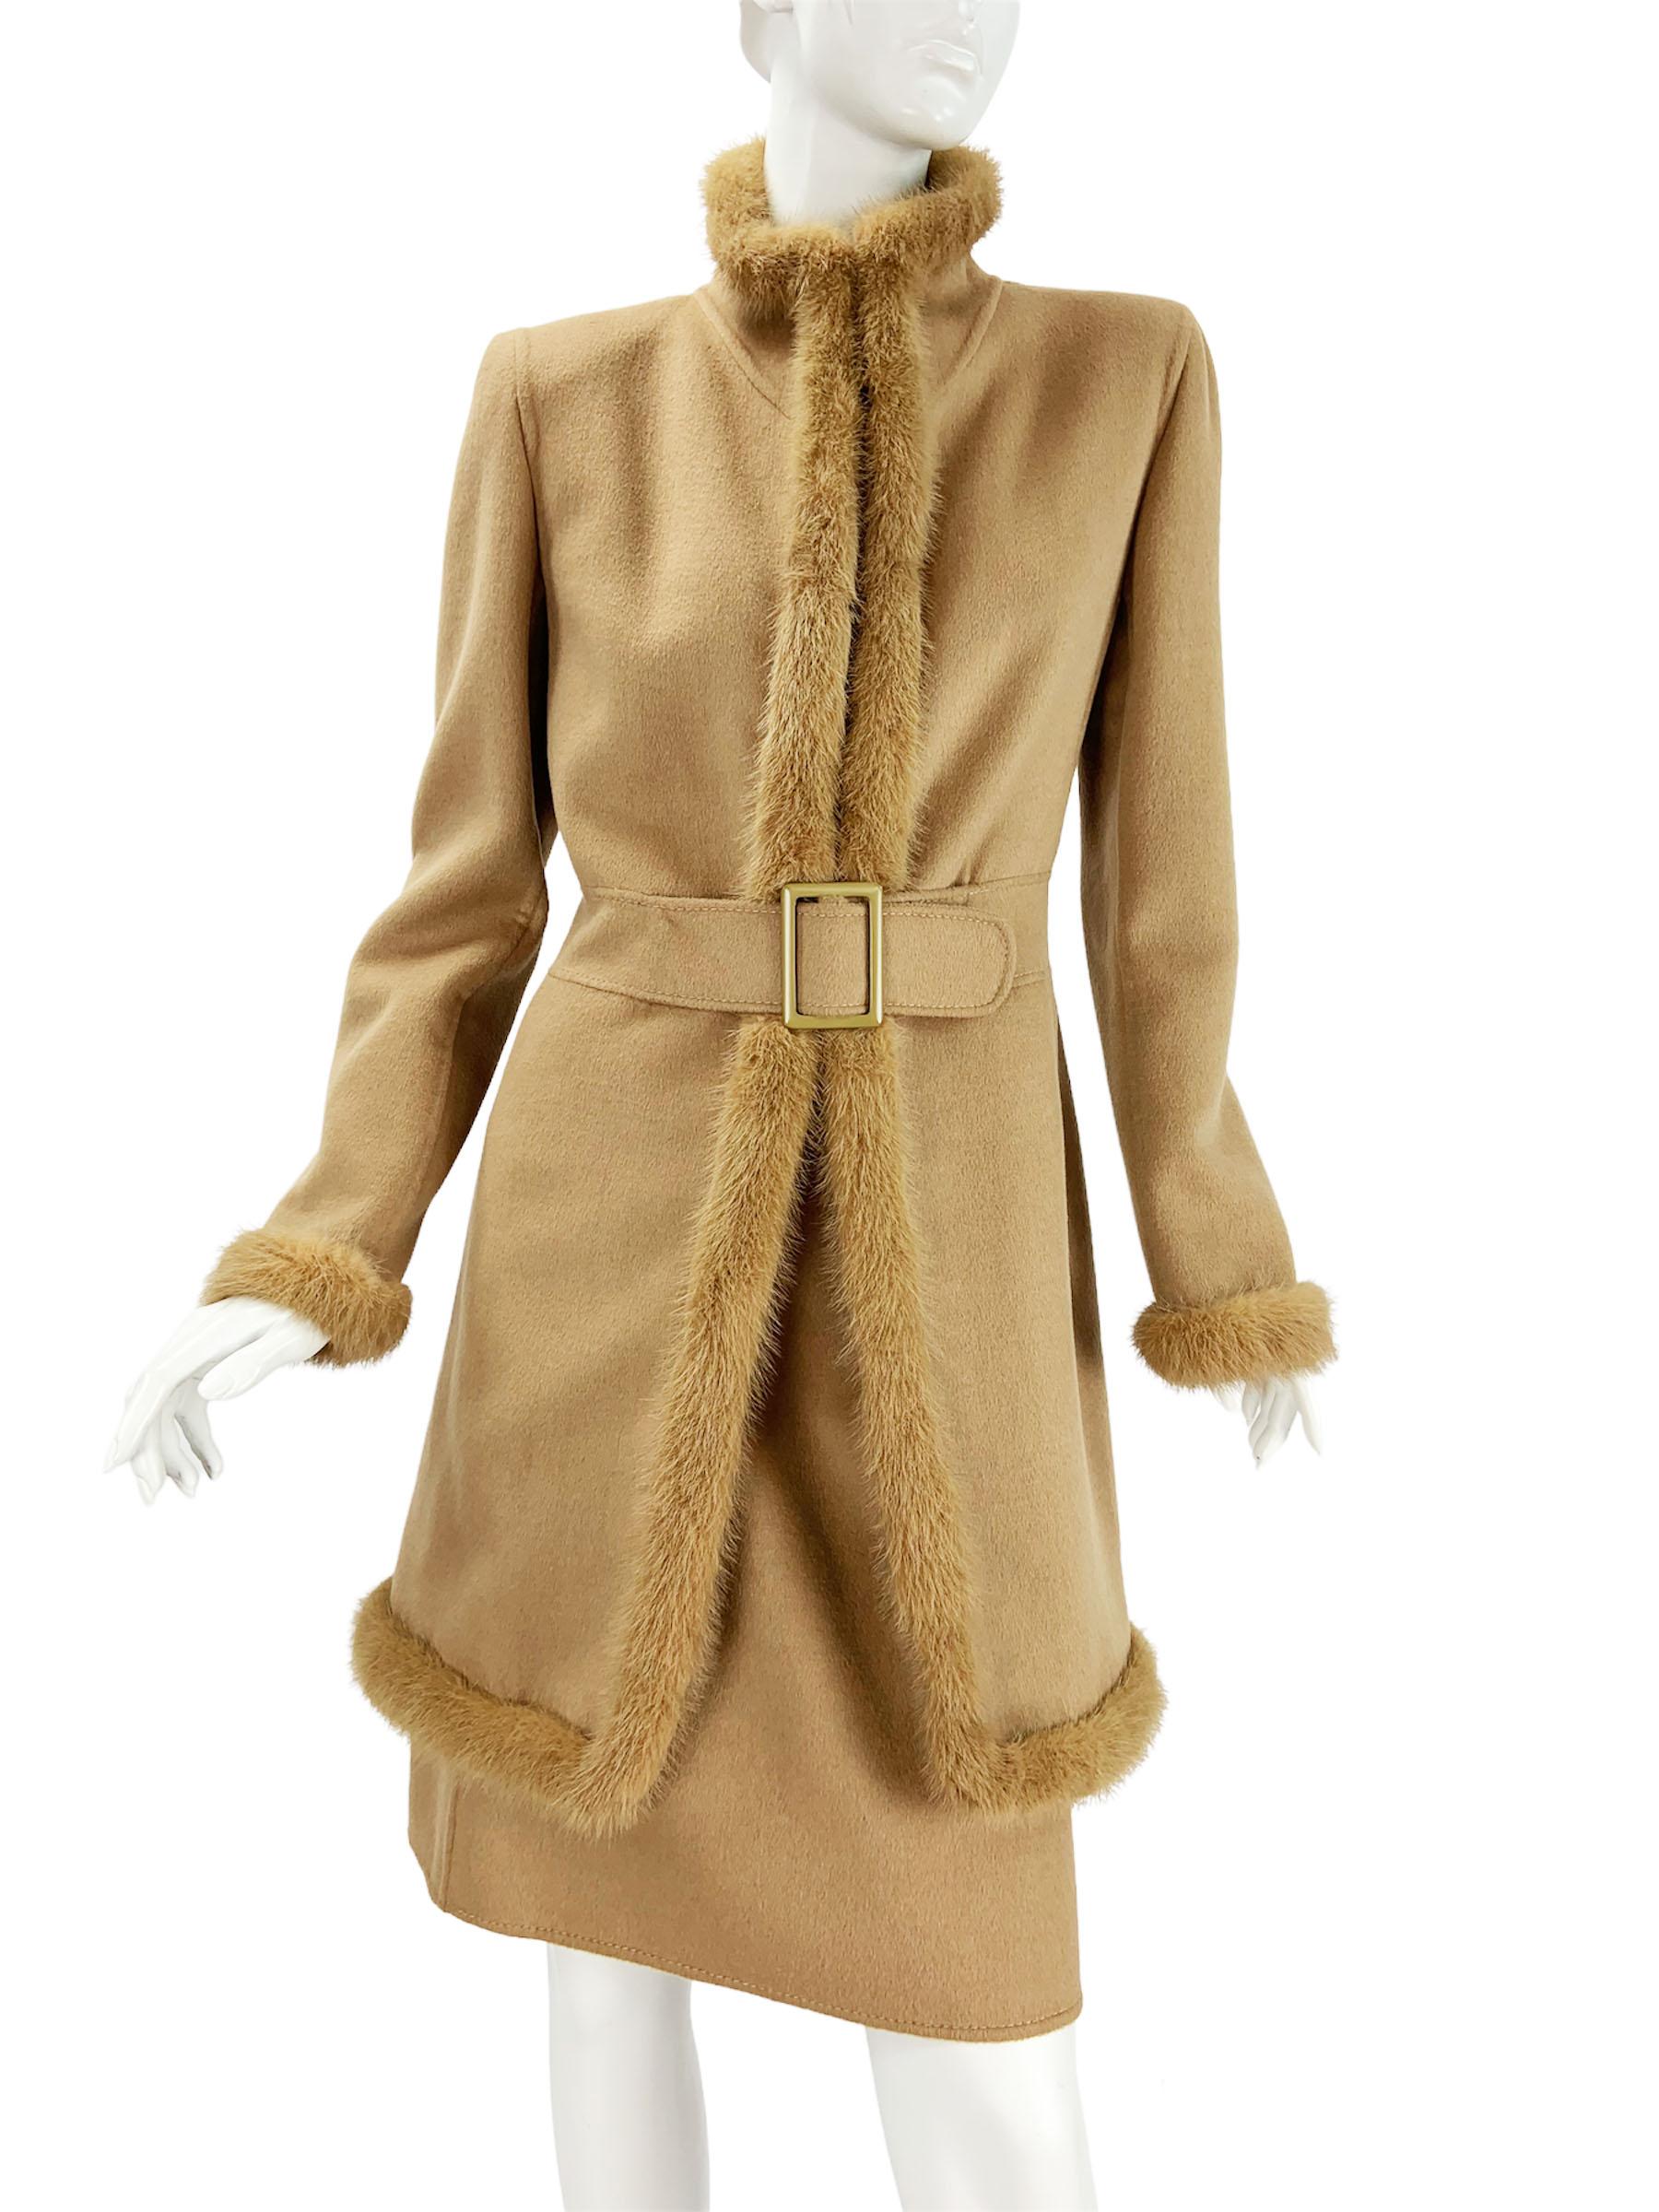 Vintage Valentino Wool Mink Trimmed Skirt Suit
Designer size - 10
90% Wool, 10% Cashgora 
Jacket: A-Line Style, Mink Trim, Attached Belt, Padded Shoulders, Hook and Eye Closure.
Measurements: Length - 34 inches, Bust - 34/36